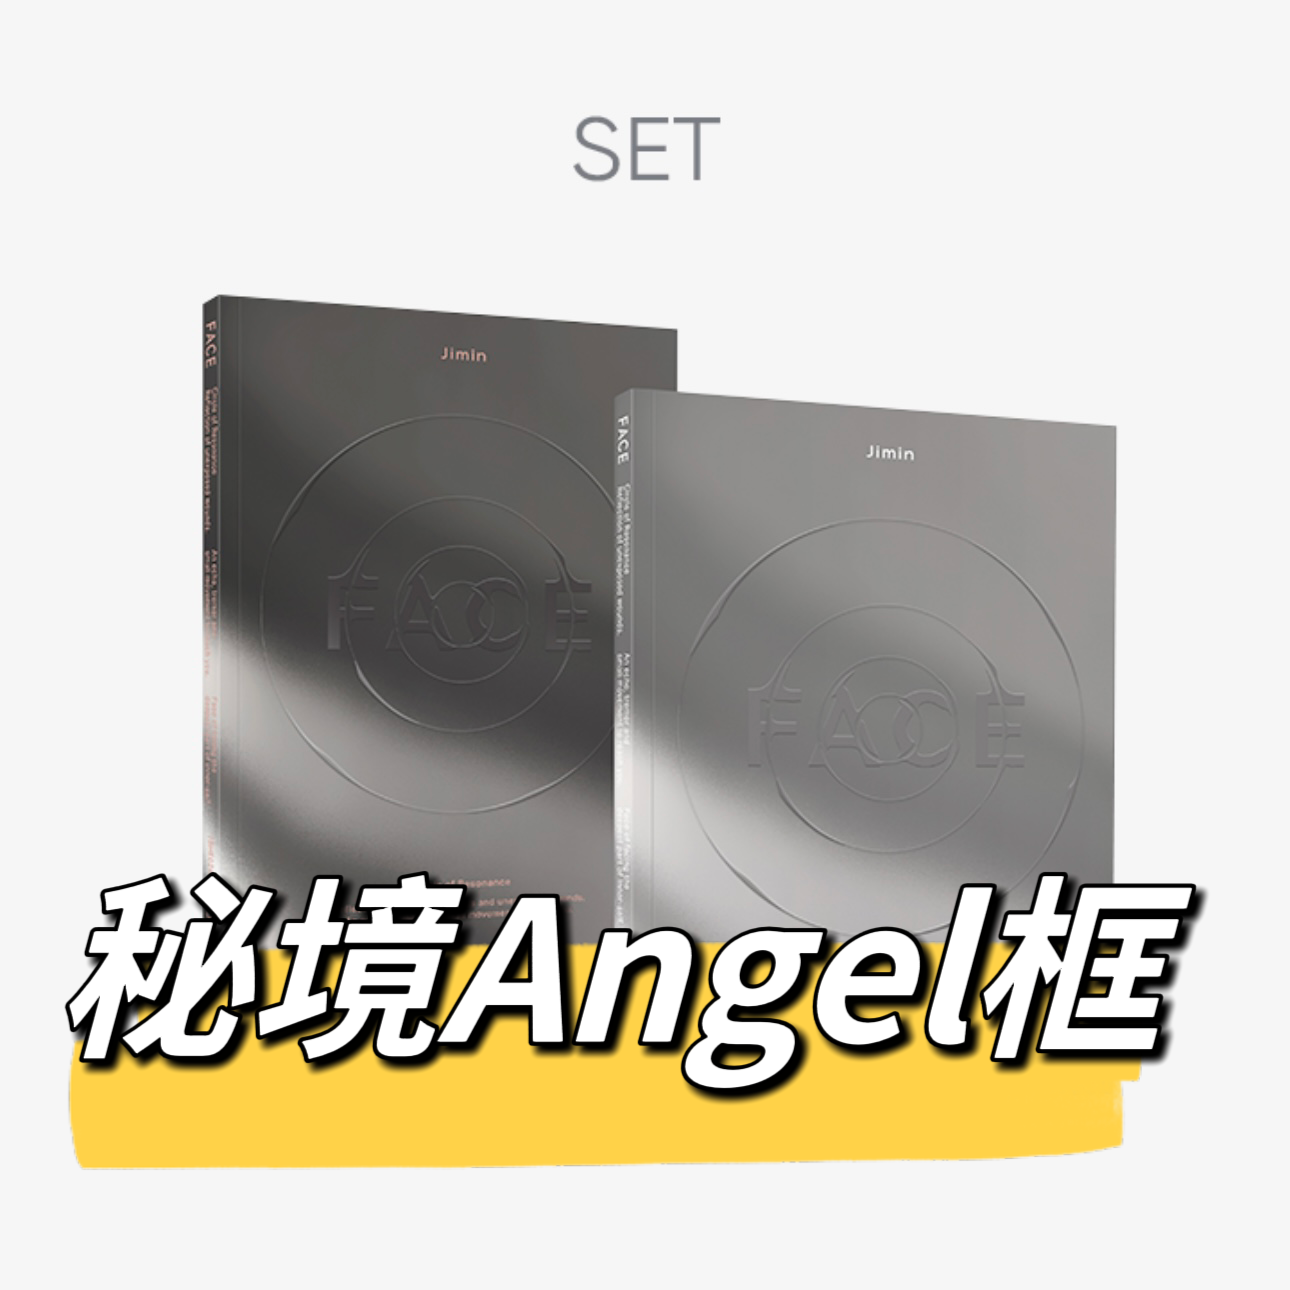 [全款 秘境Angel框 特典专] [Ktown4u Special Gift] [2CD 套装] Jimin (BTS) - [FACE] (Invisible Face + Undefinable Face)_朴智旻散粉